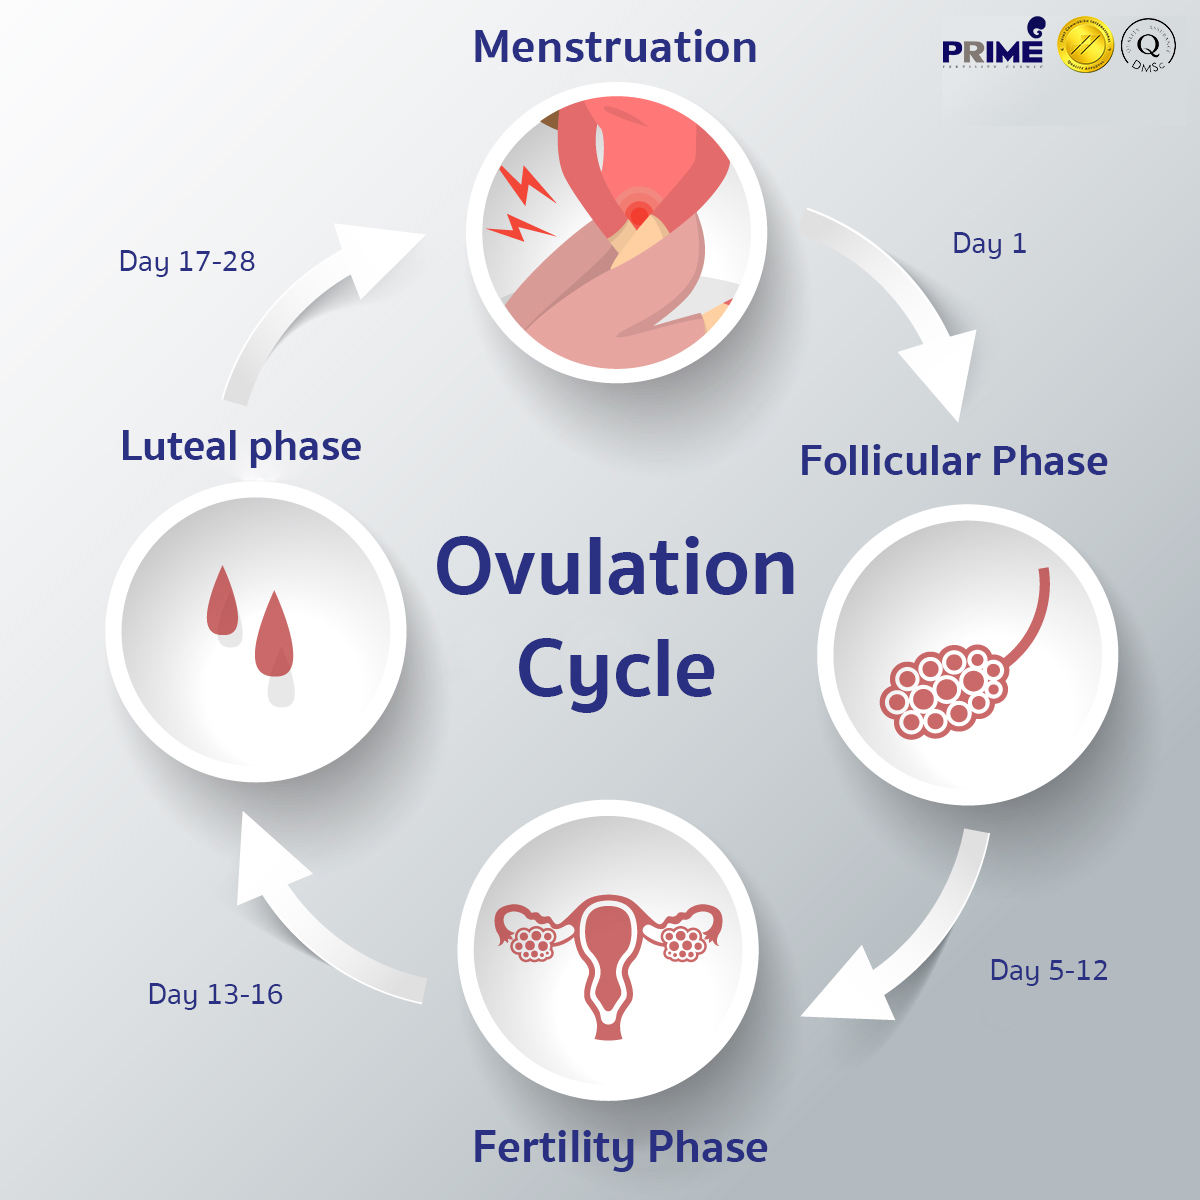 Ovulation Cycle - Ovulation cycle timeline